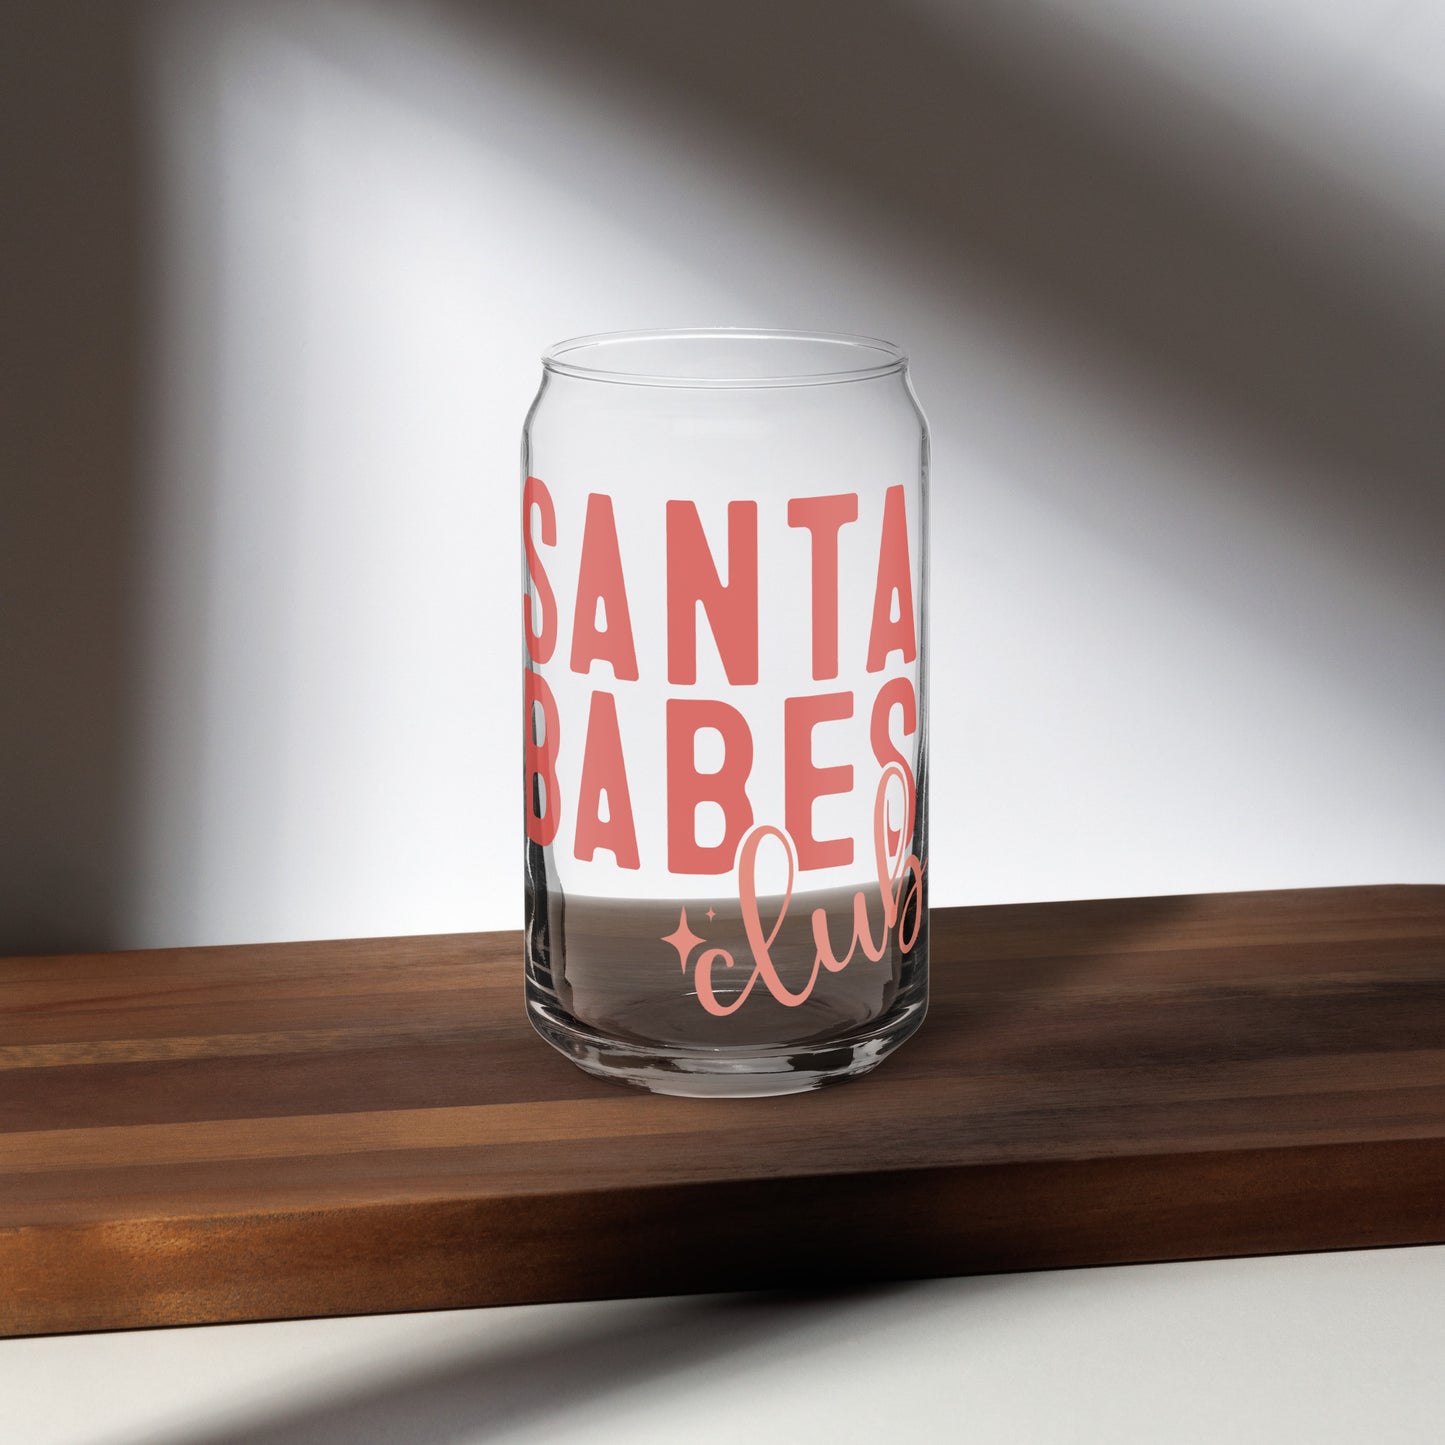 Santa Babes Club Can-shaped glass